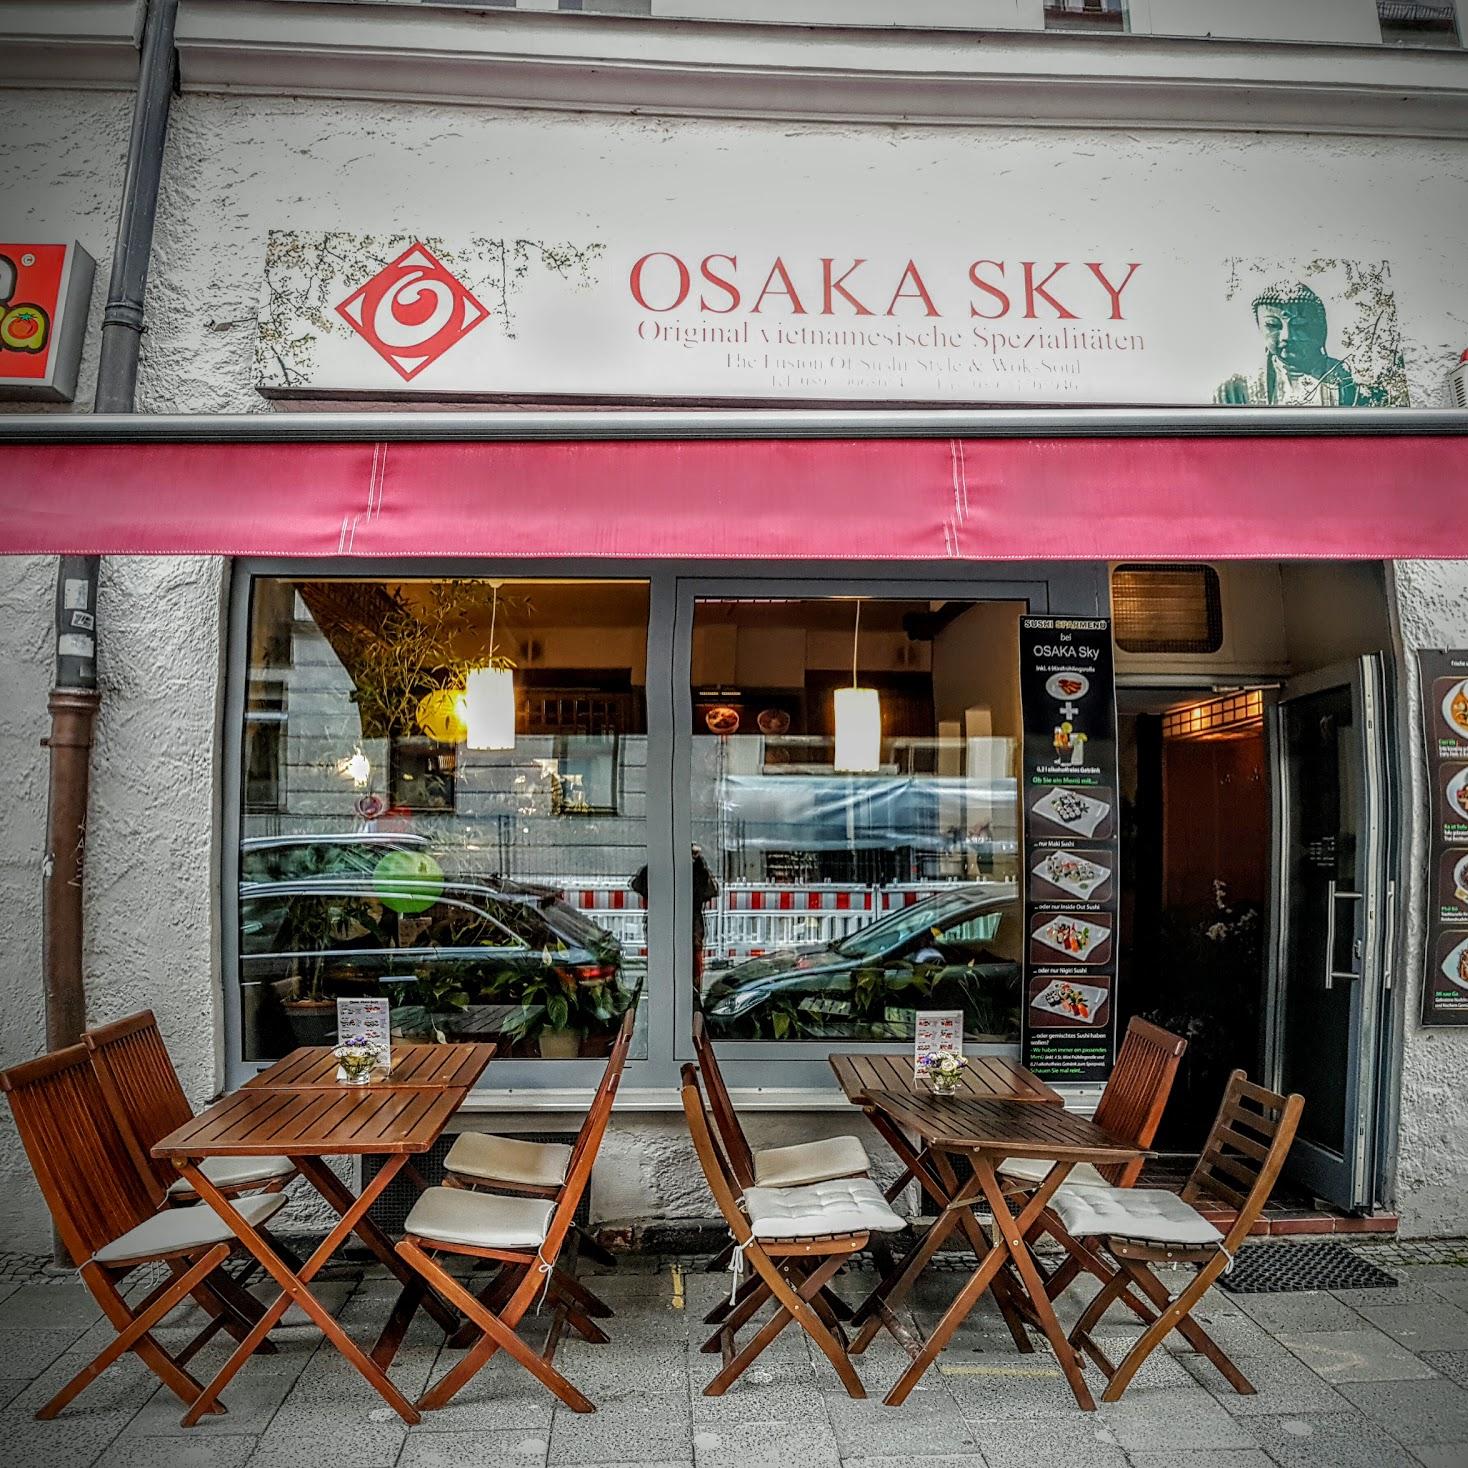 Restaurant "Osaka Sky Restaurant" in München